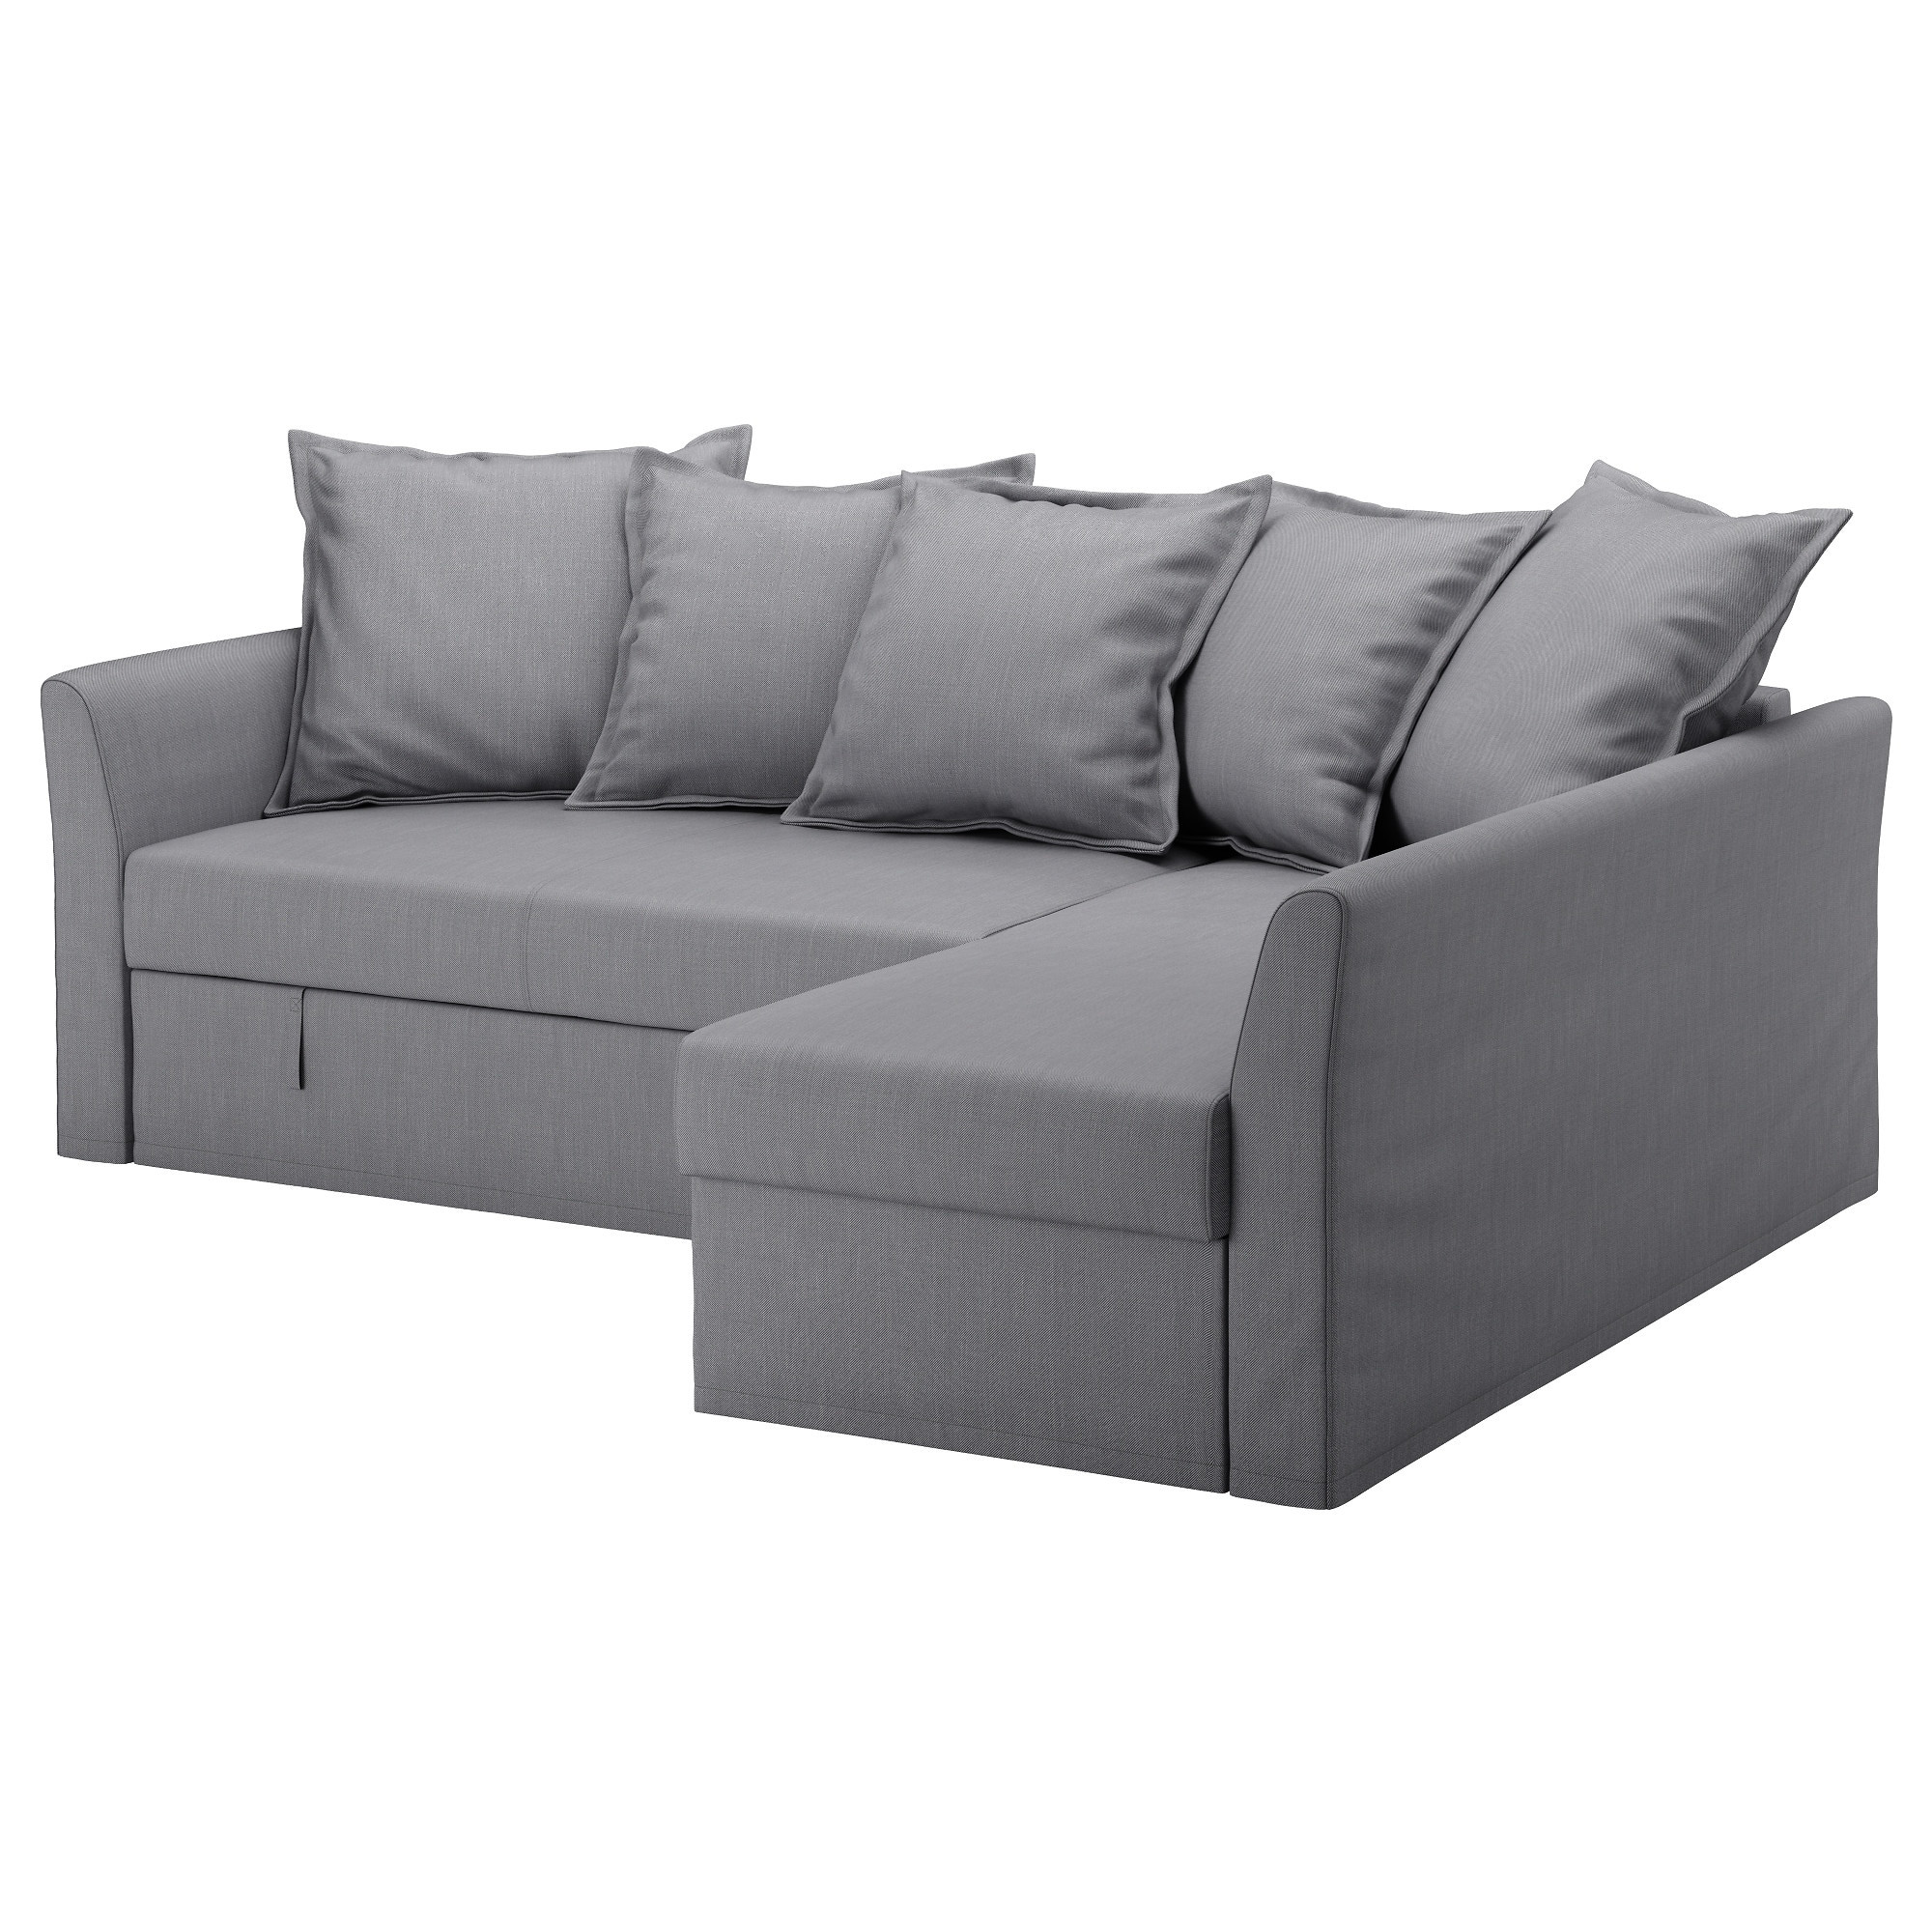 Best ideas about Ikea Sleeper Sofa
. Save or Pin HOLMSUND Corner sofa bed Nordvalla medium grey IKEA Now.